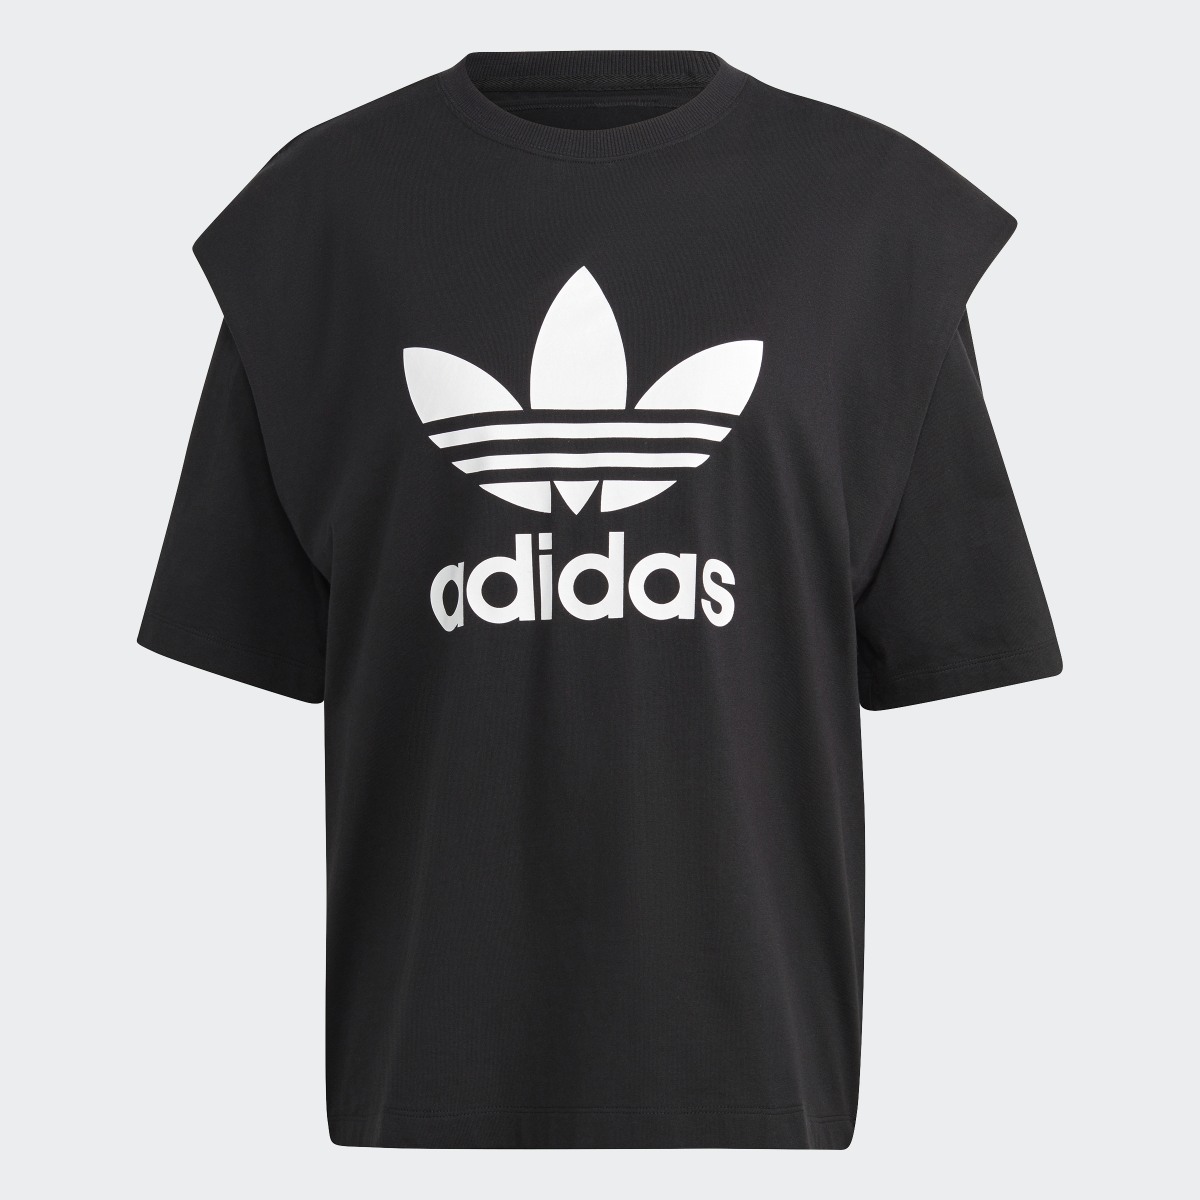 Adidas Always Original T-Shirt. 5